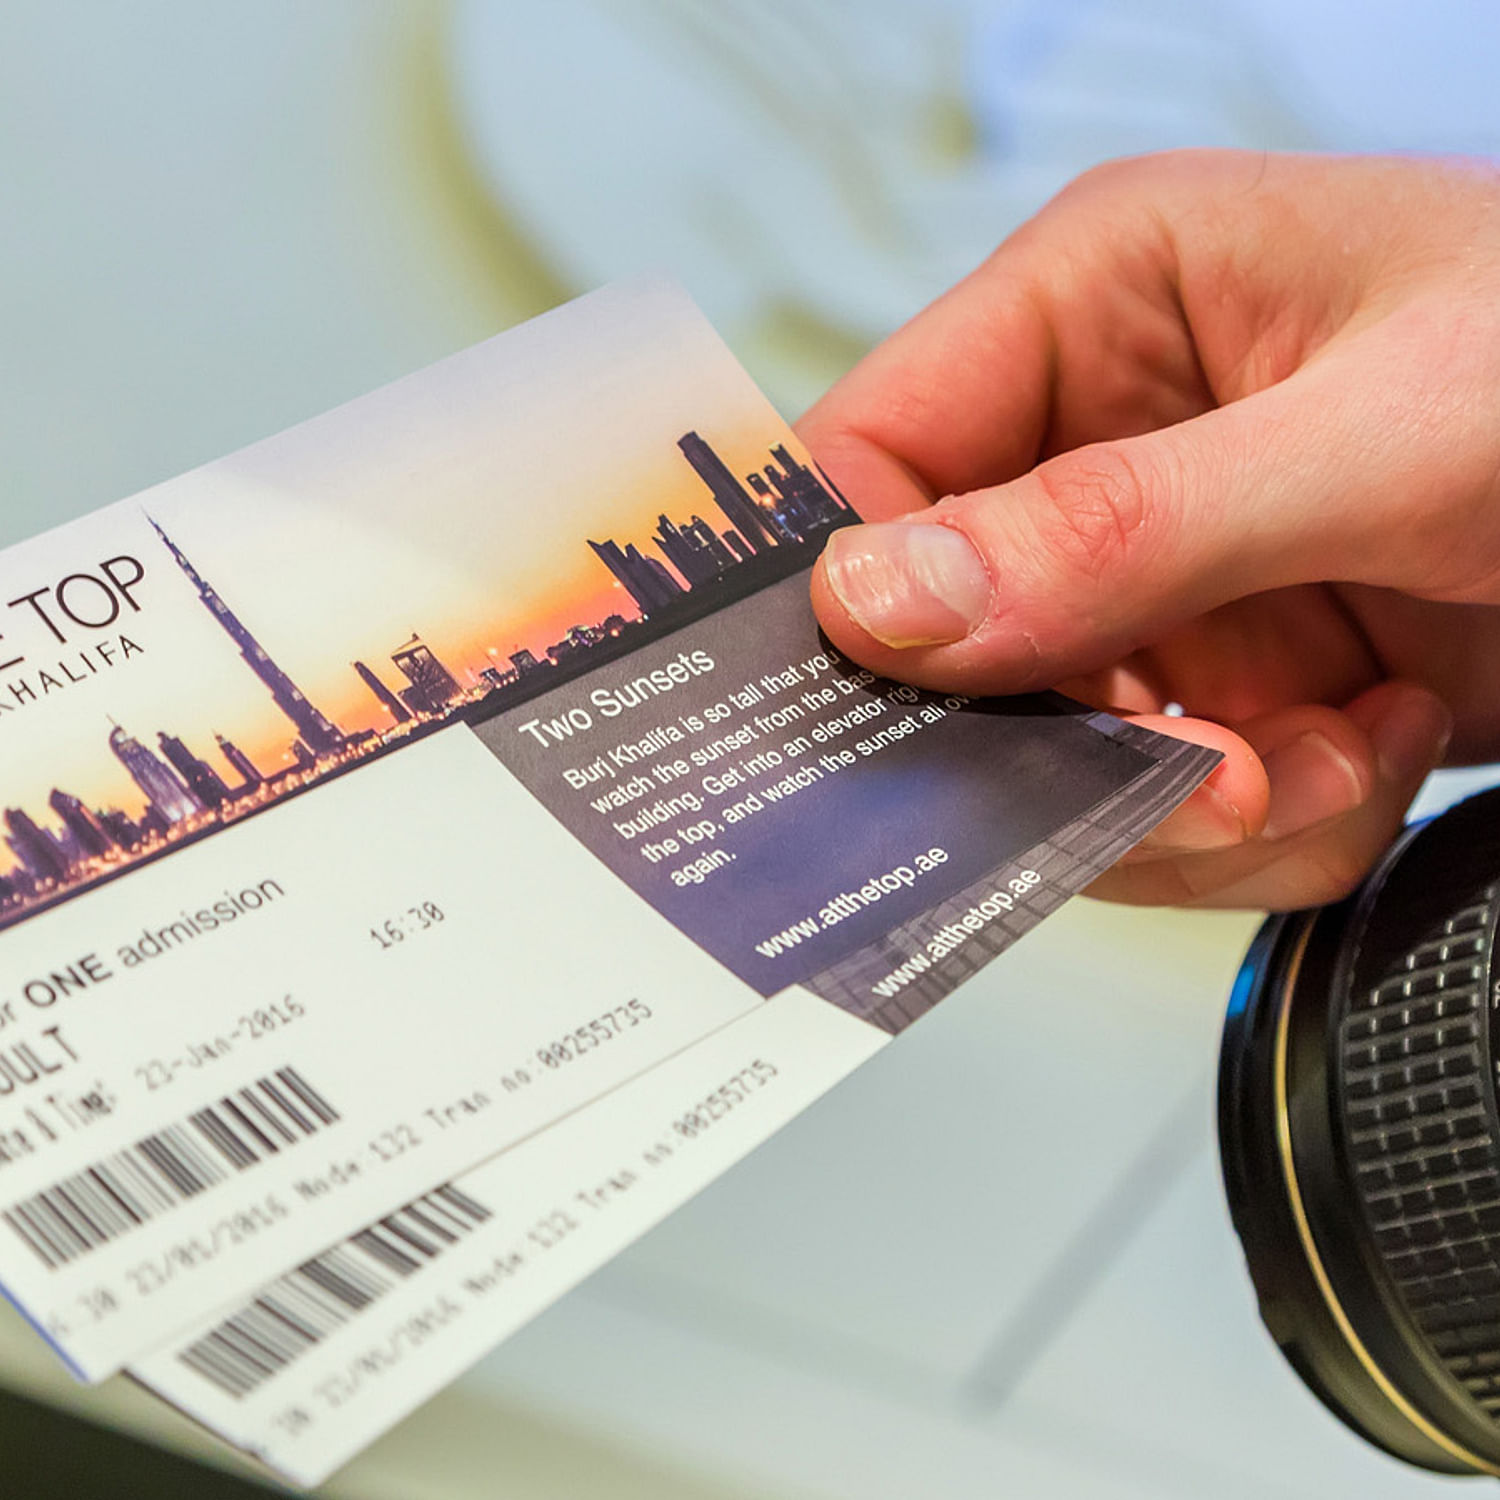 Book tickets in advance. Dubai ticket. Burj khalifa Top tickets. To book tickets in Advance. To book tickets.